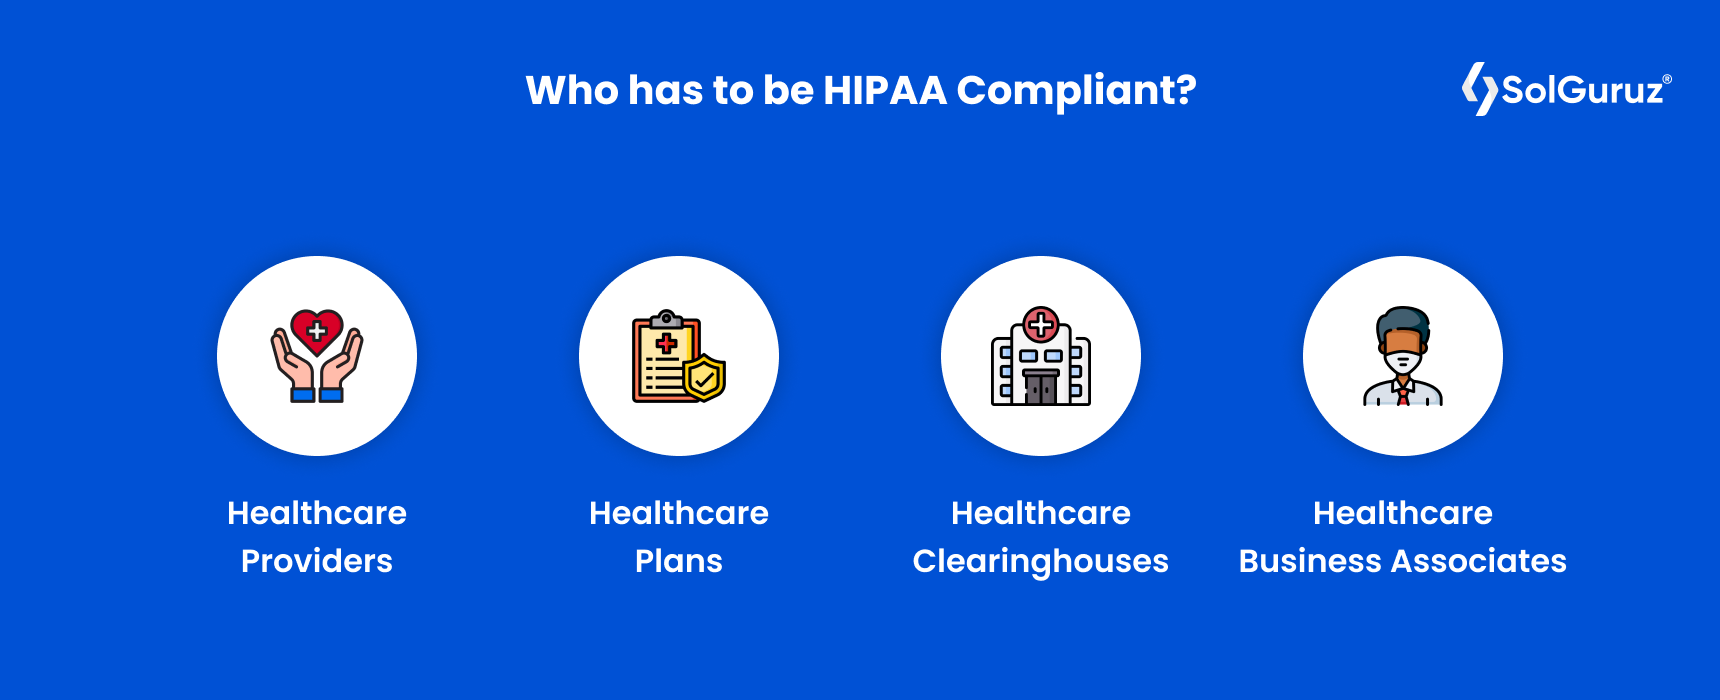 Who has to be HIPAA Compliant